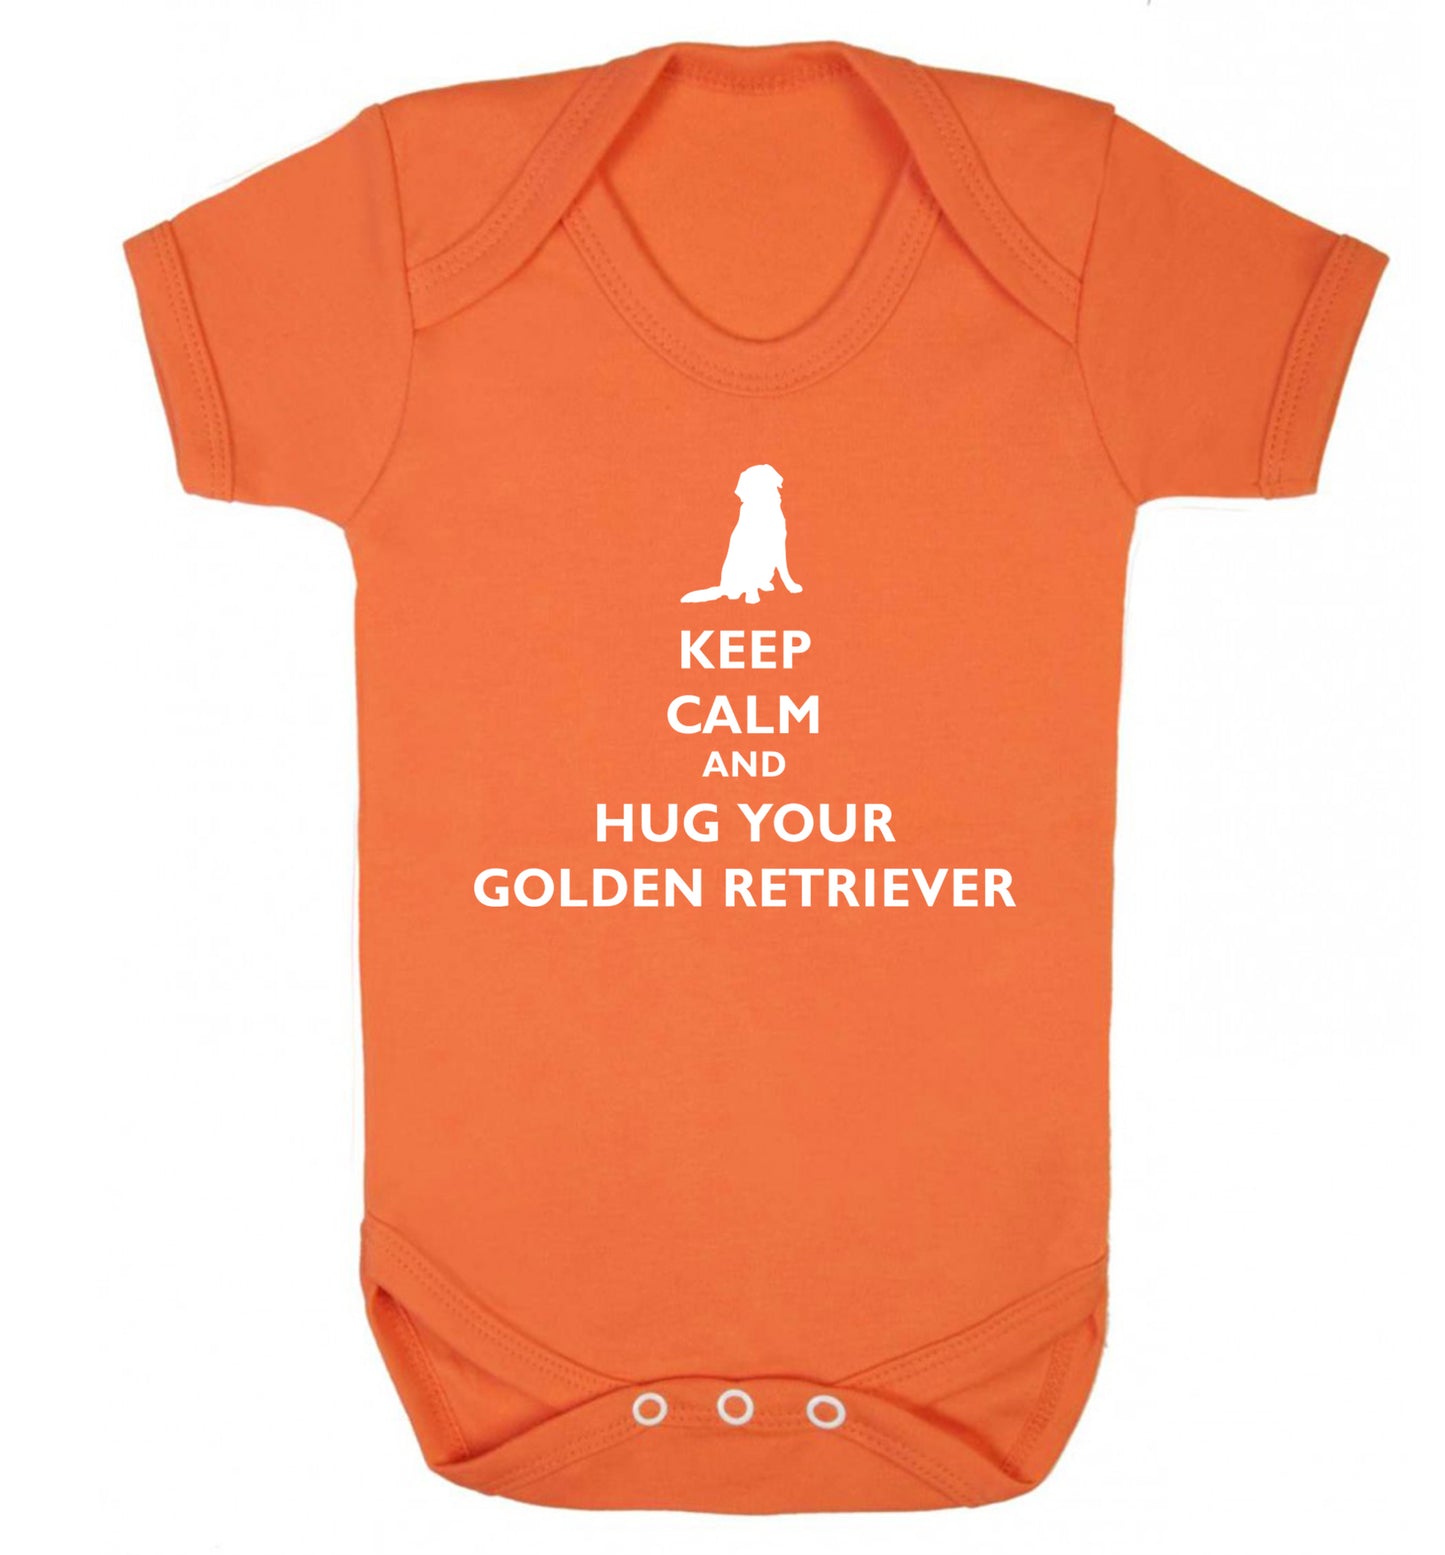 Keep calm and hug your golden retriever Baby Vest orange 18-24 months